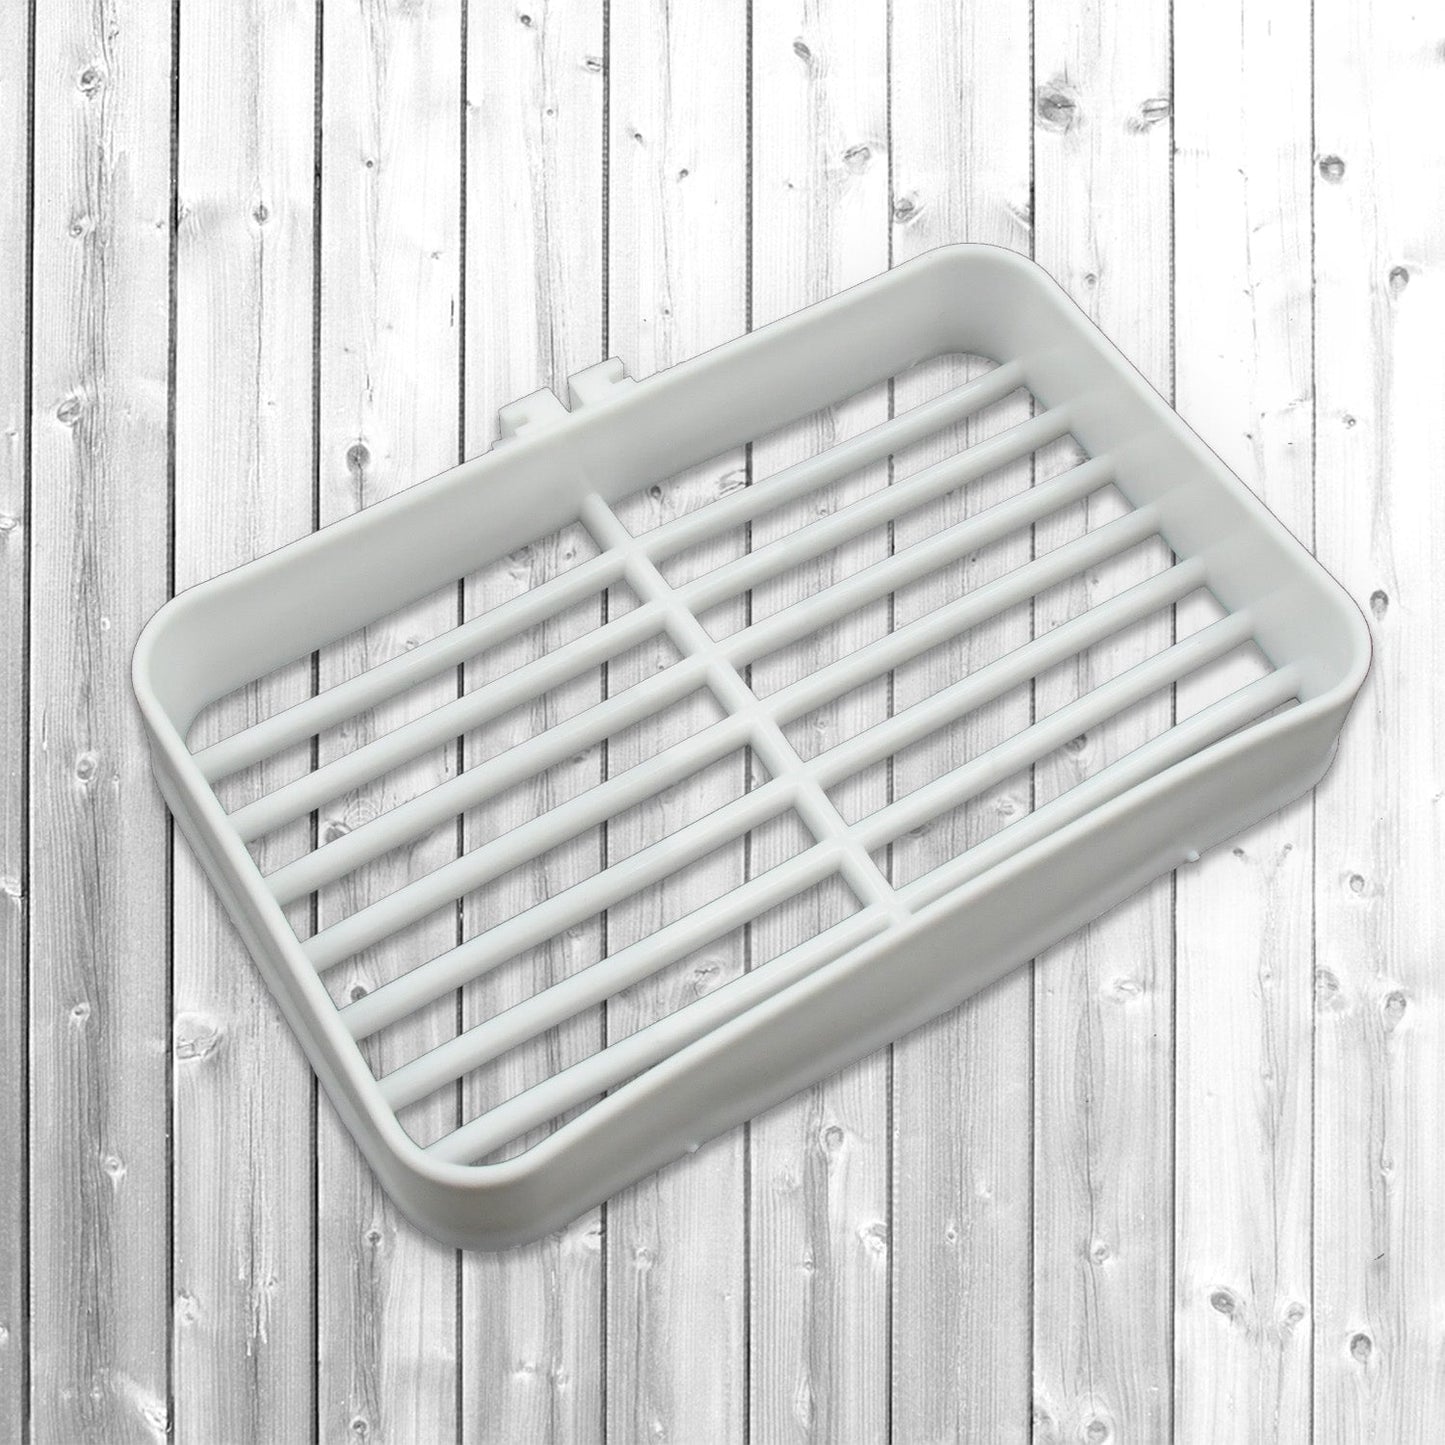 4194 Soap Dish Holder for Bathroom Shower Wall Mounted Self Adhesive Soap Holder Saver Tray-Plastic Sponge Holder for Kitchen Storage Rack Soap Box (Plastic Box)